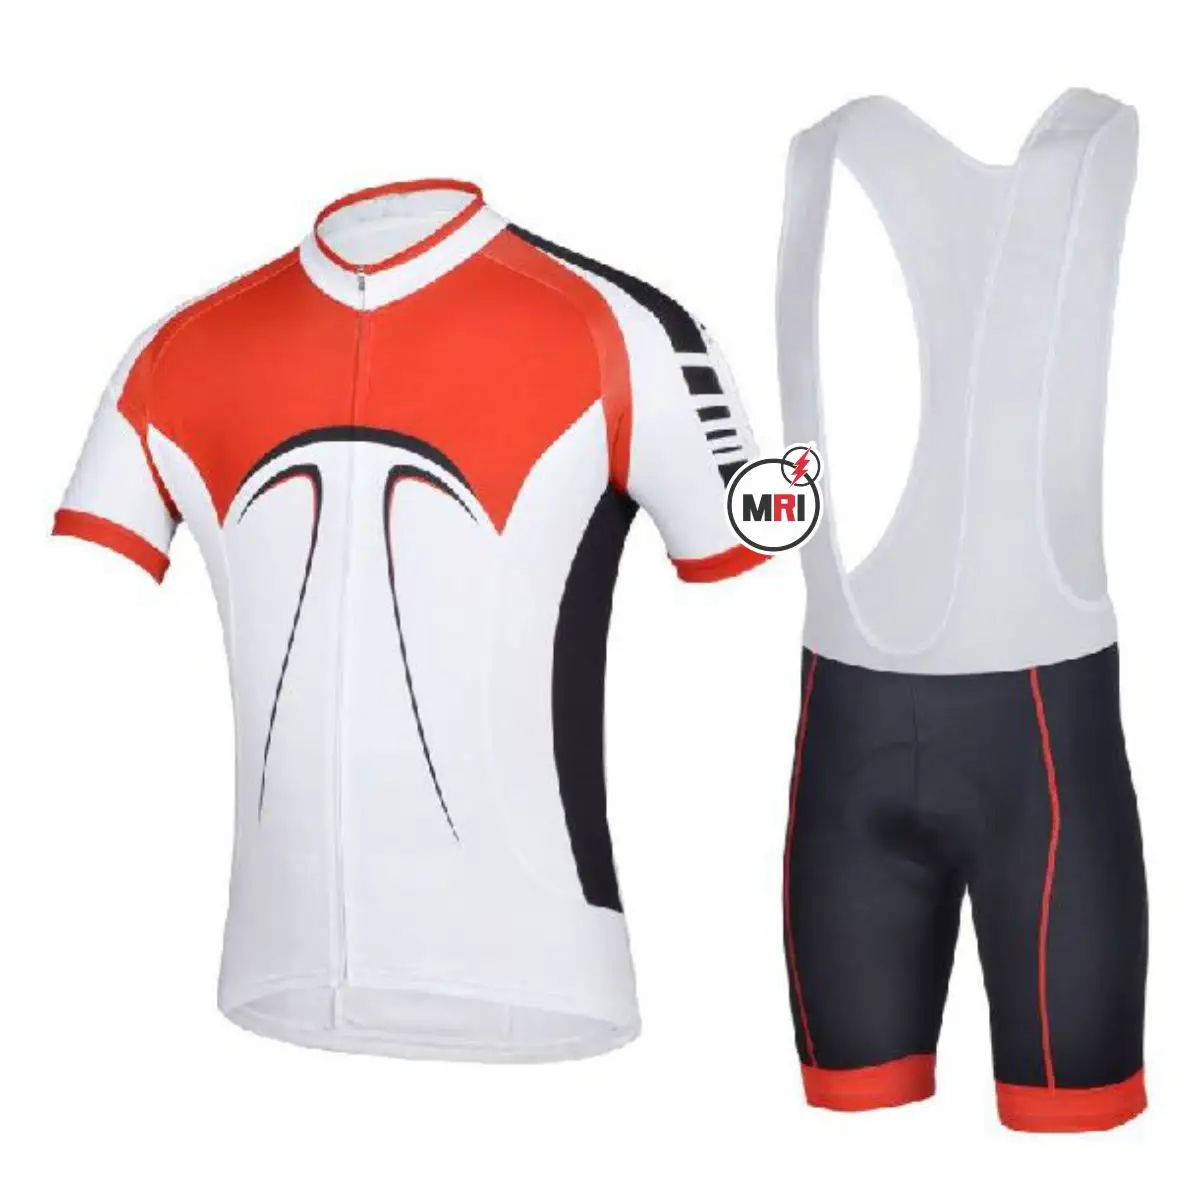 Sommer uniformen De Ciclismo Radsport bekleidung 100% Polyester Mountainbike Fahrrad trikot Stoff Custom Cycling Jersey Wear